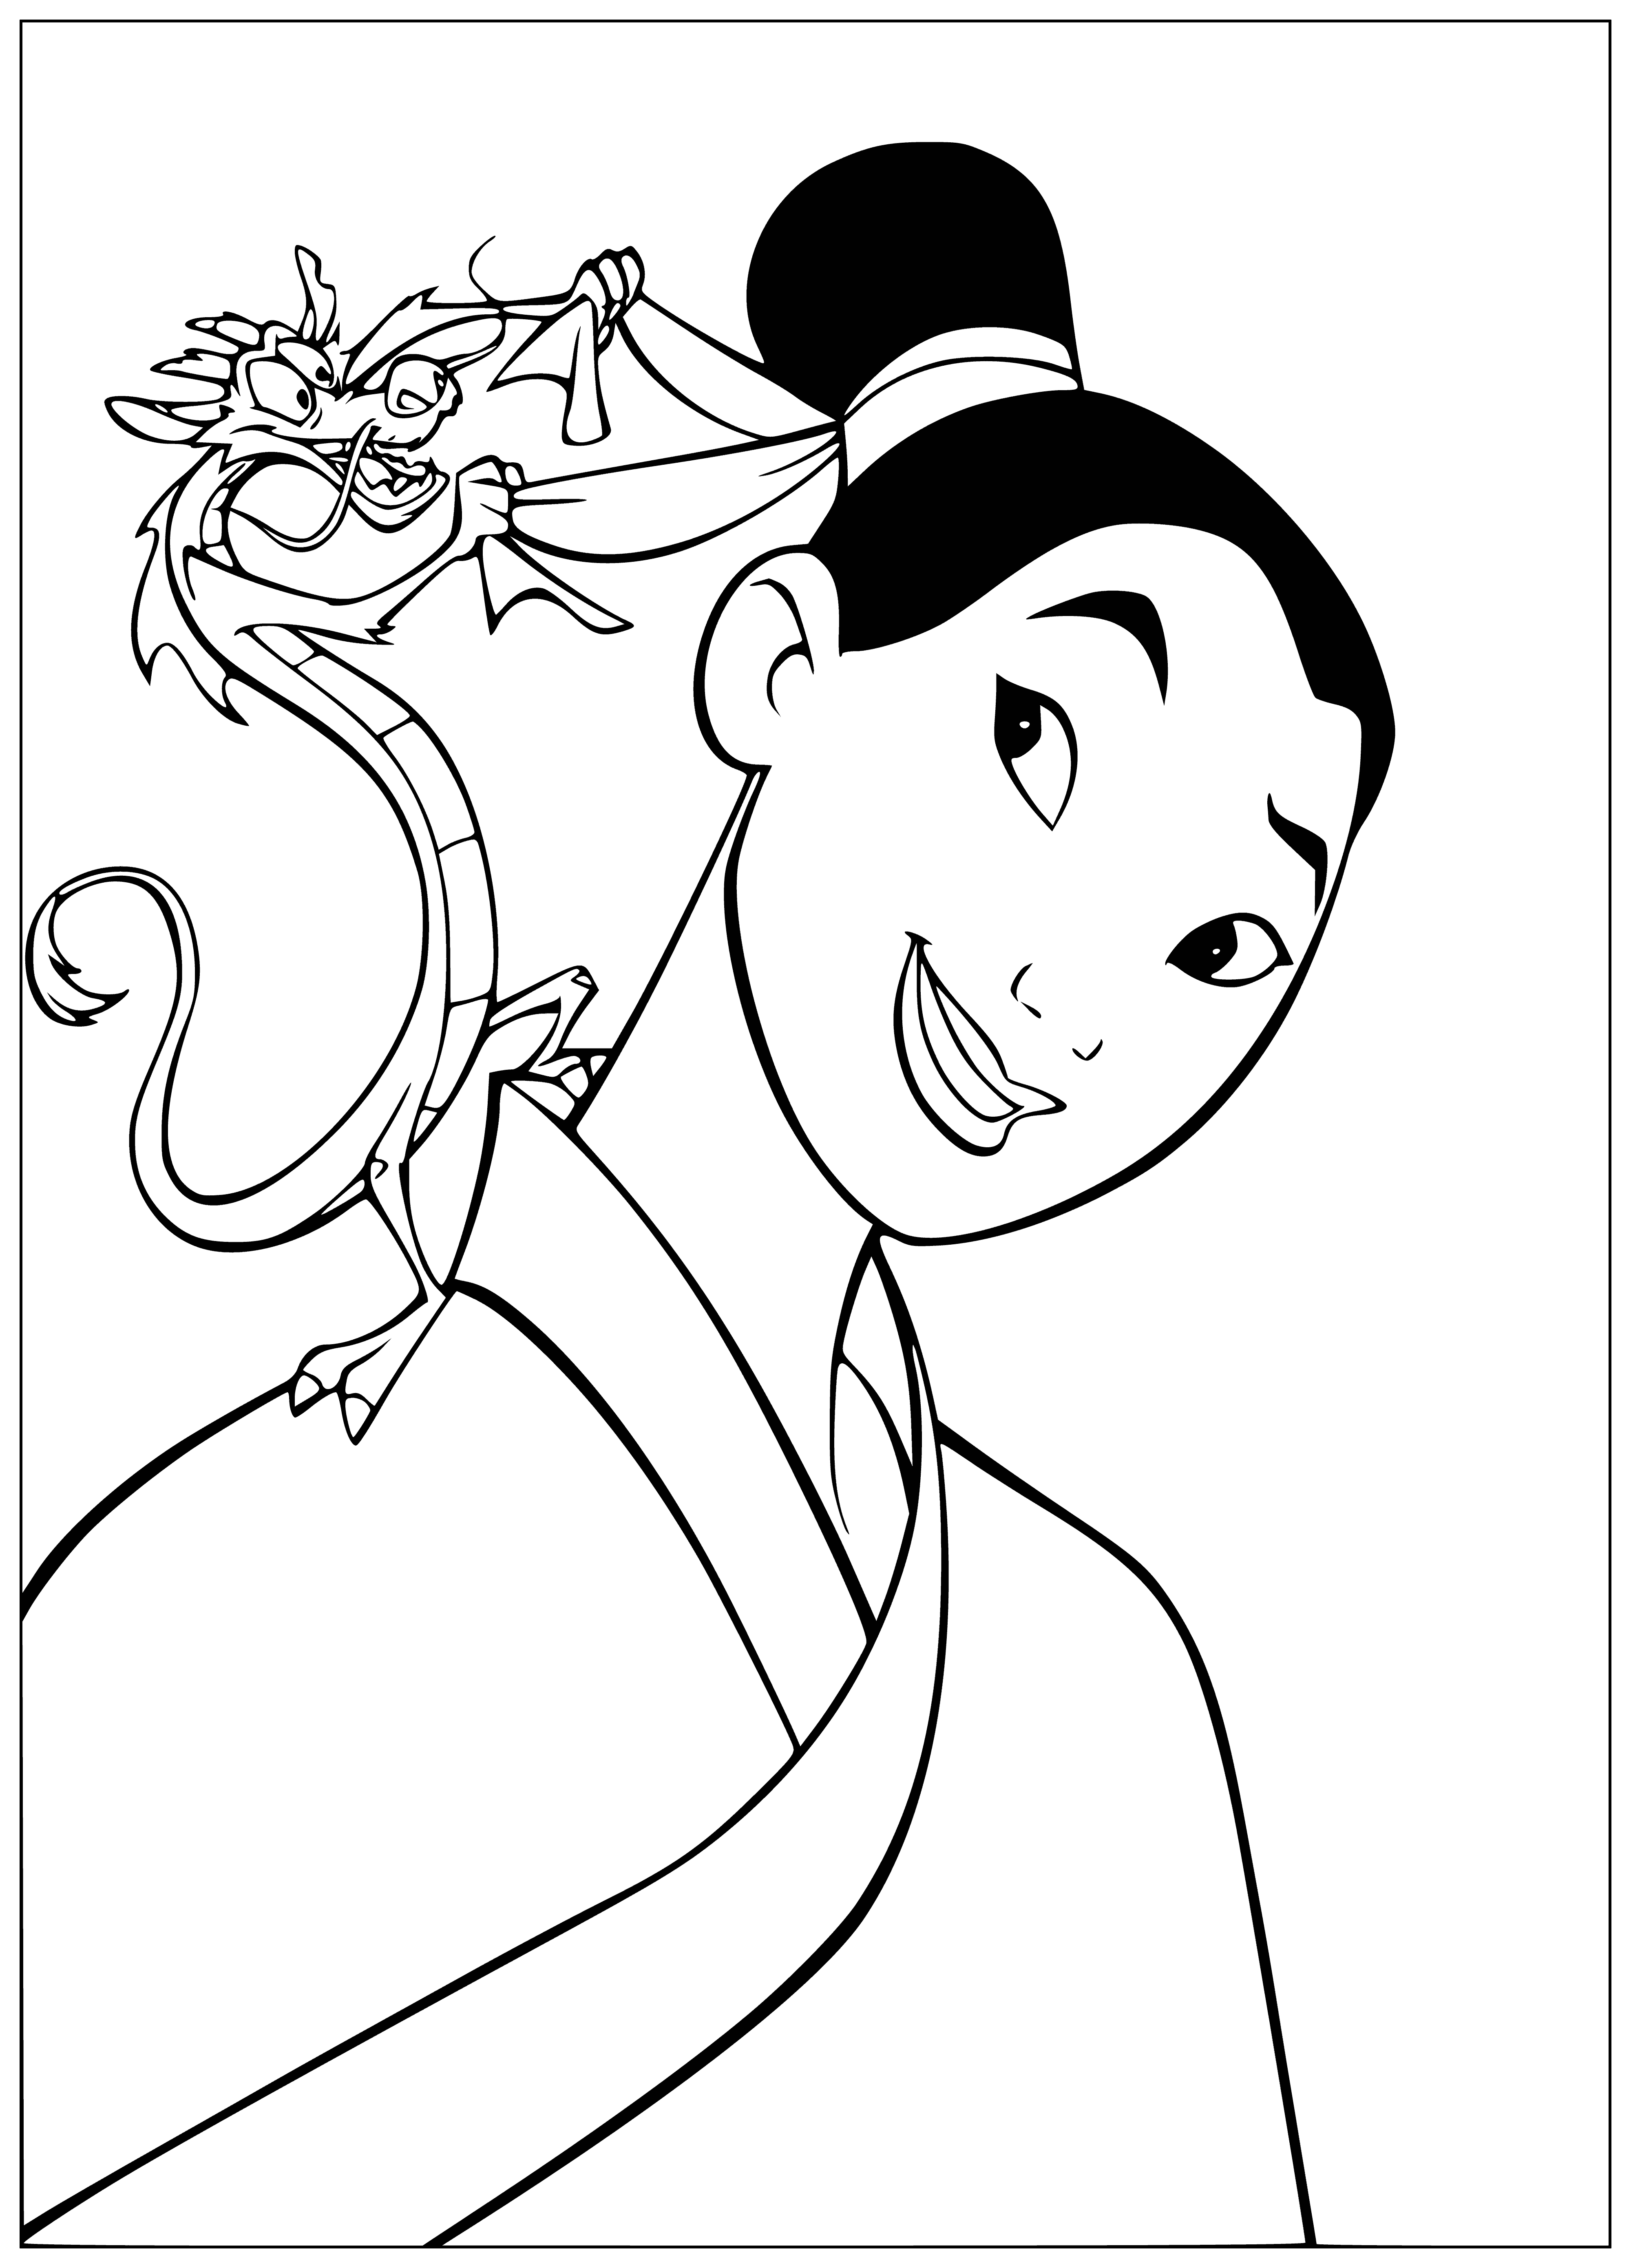 Mulan coloring page